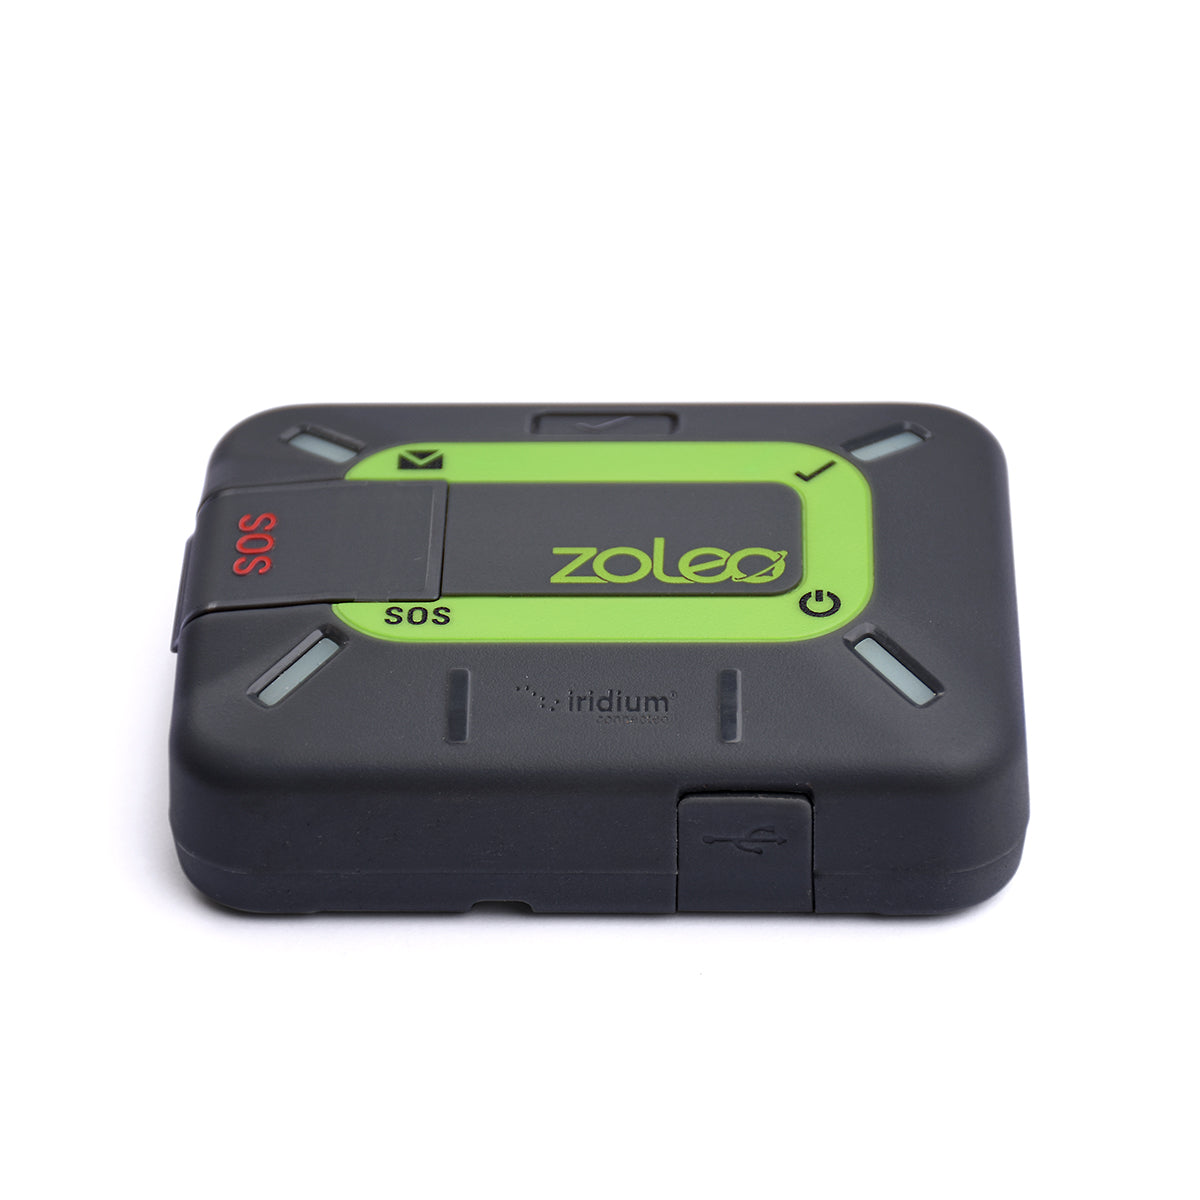 ZOLEO Global Satellite Communicator